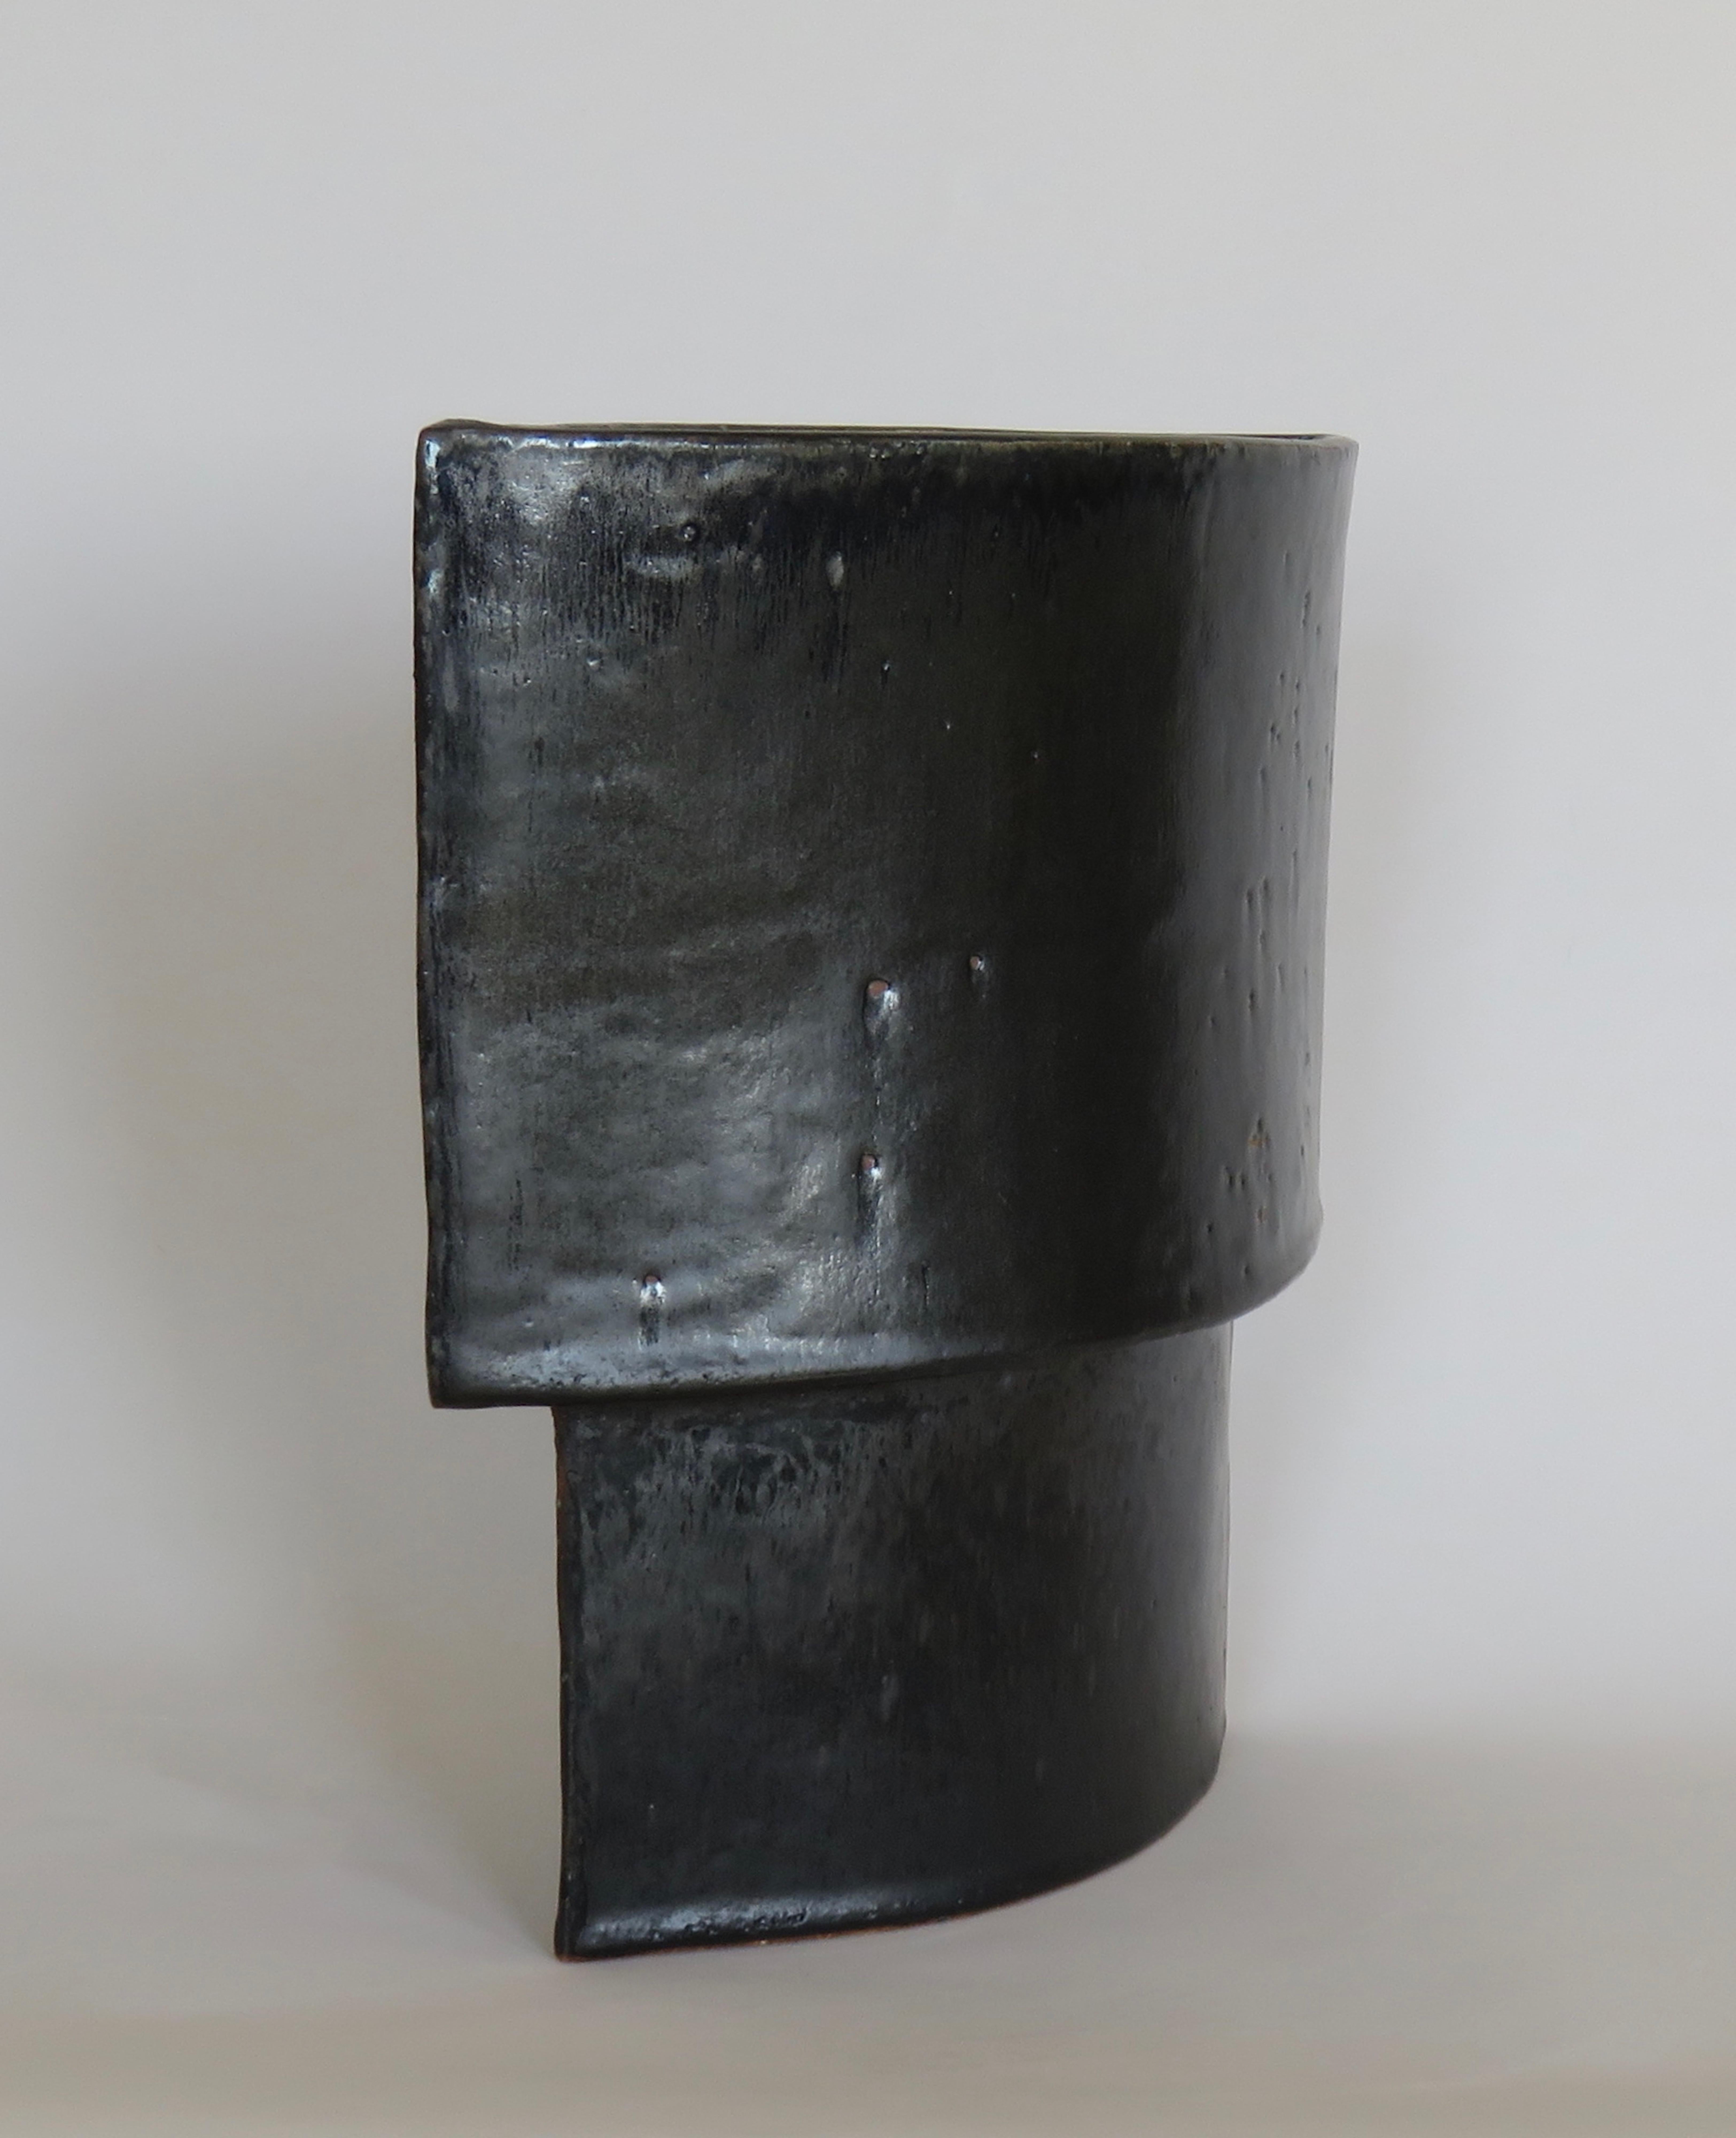 Contemporary Large Hand Built Ceramic Vase, Architectural Construction in Mottled Black Glaze